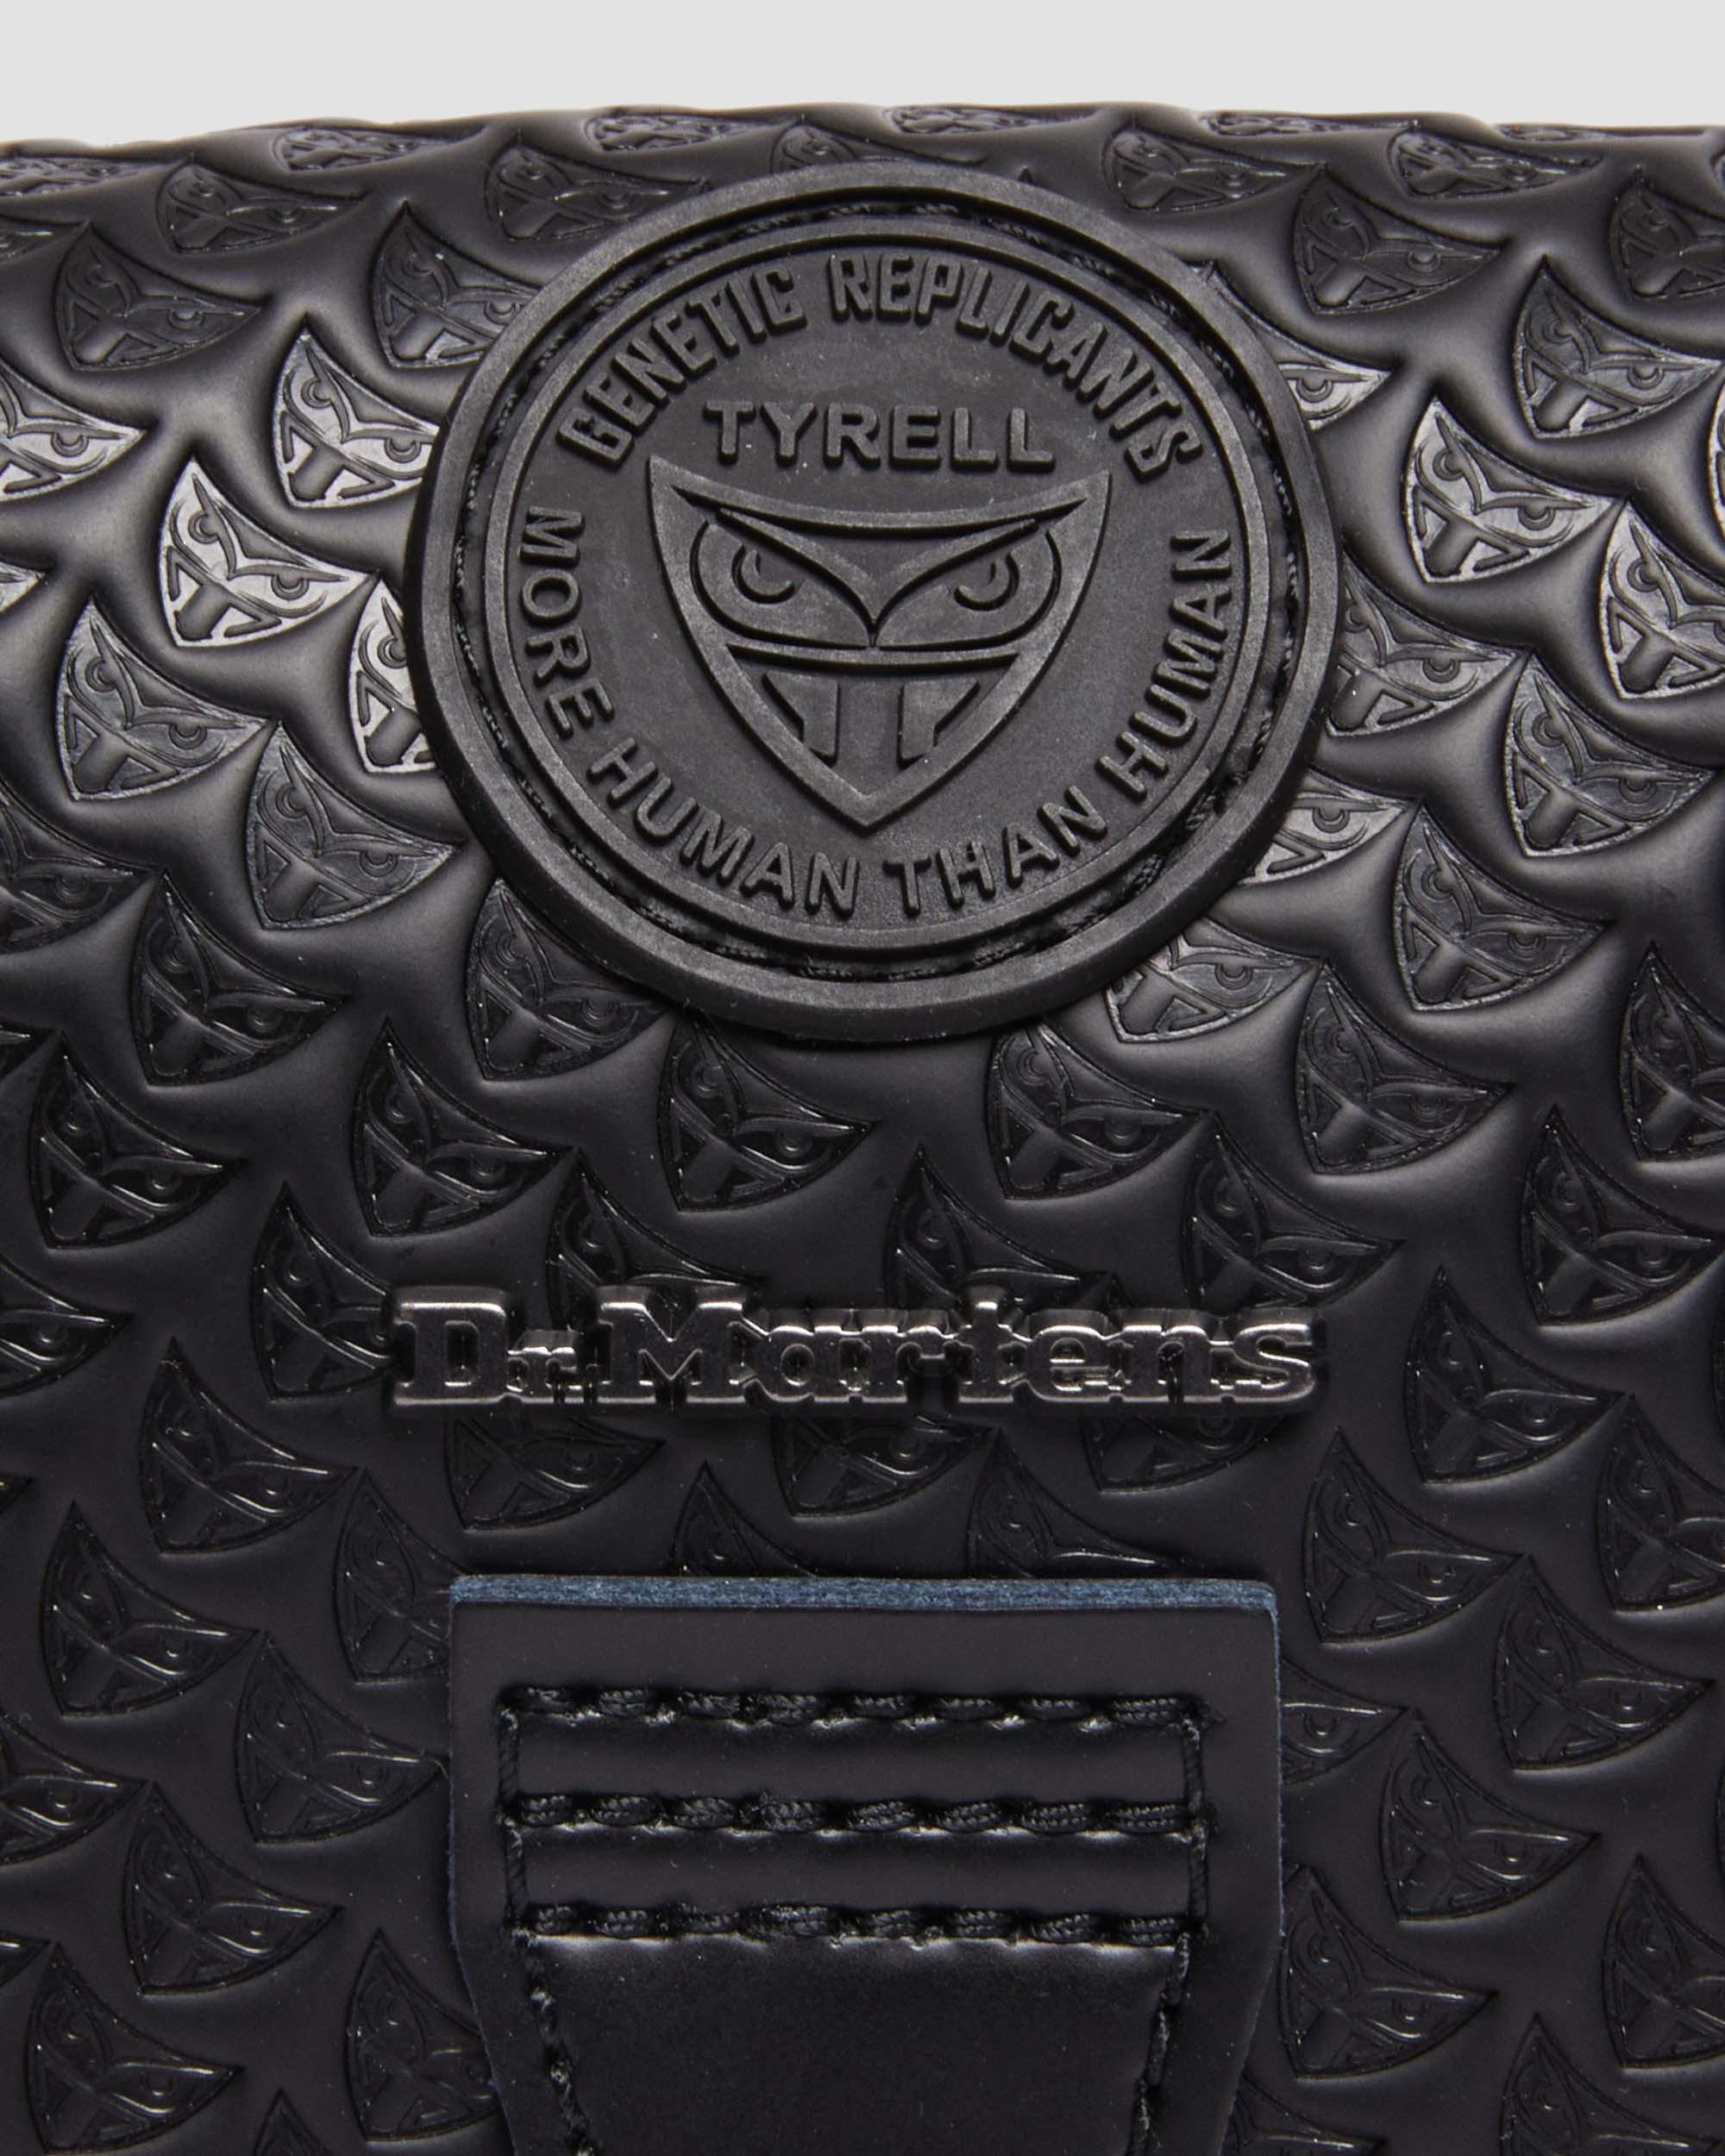 WB Blade Runner Leather Vertical Crossbody Bag in Black